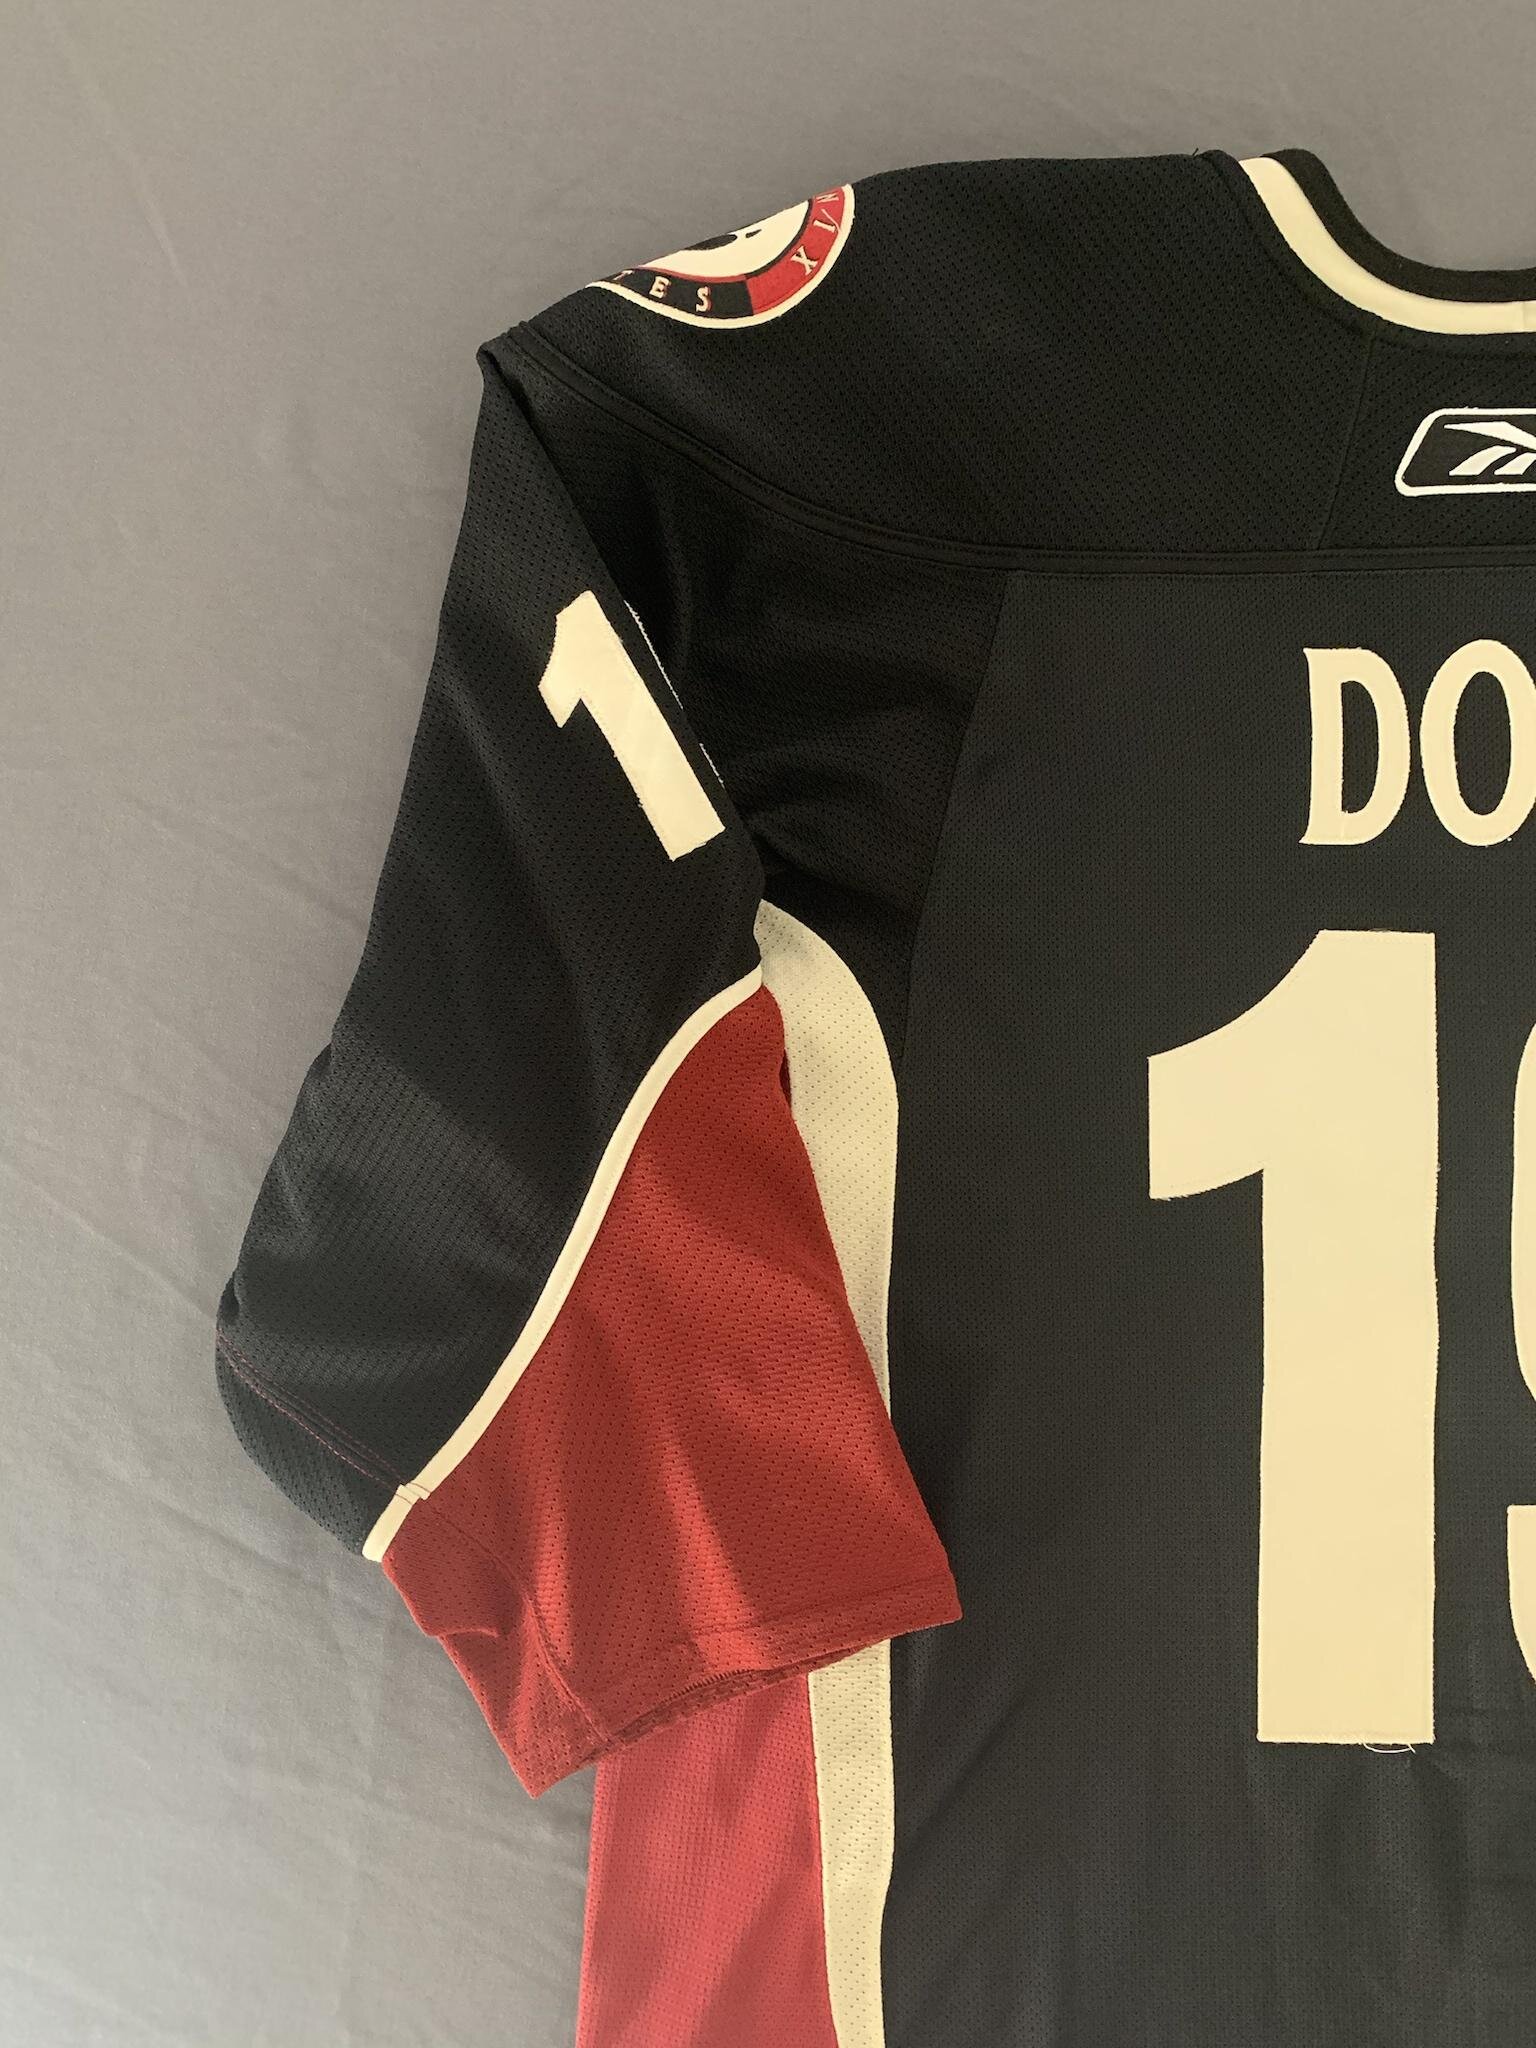 Shane Doan & Josh Doan Game Worn Jerseys — Desert Hockey Threads